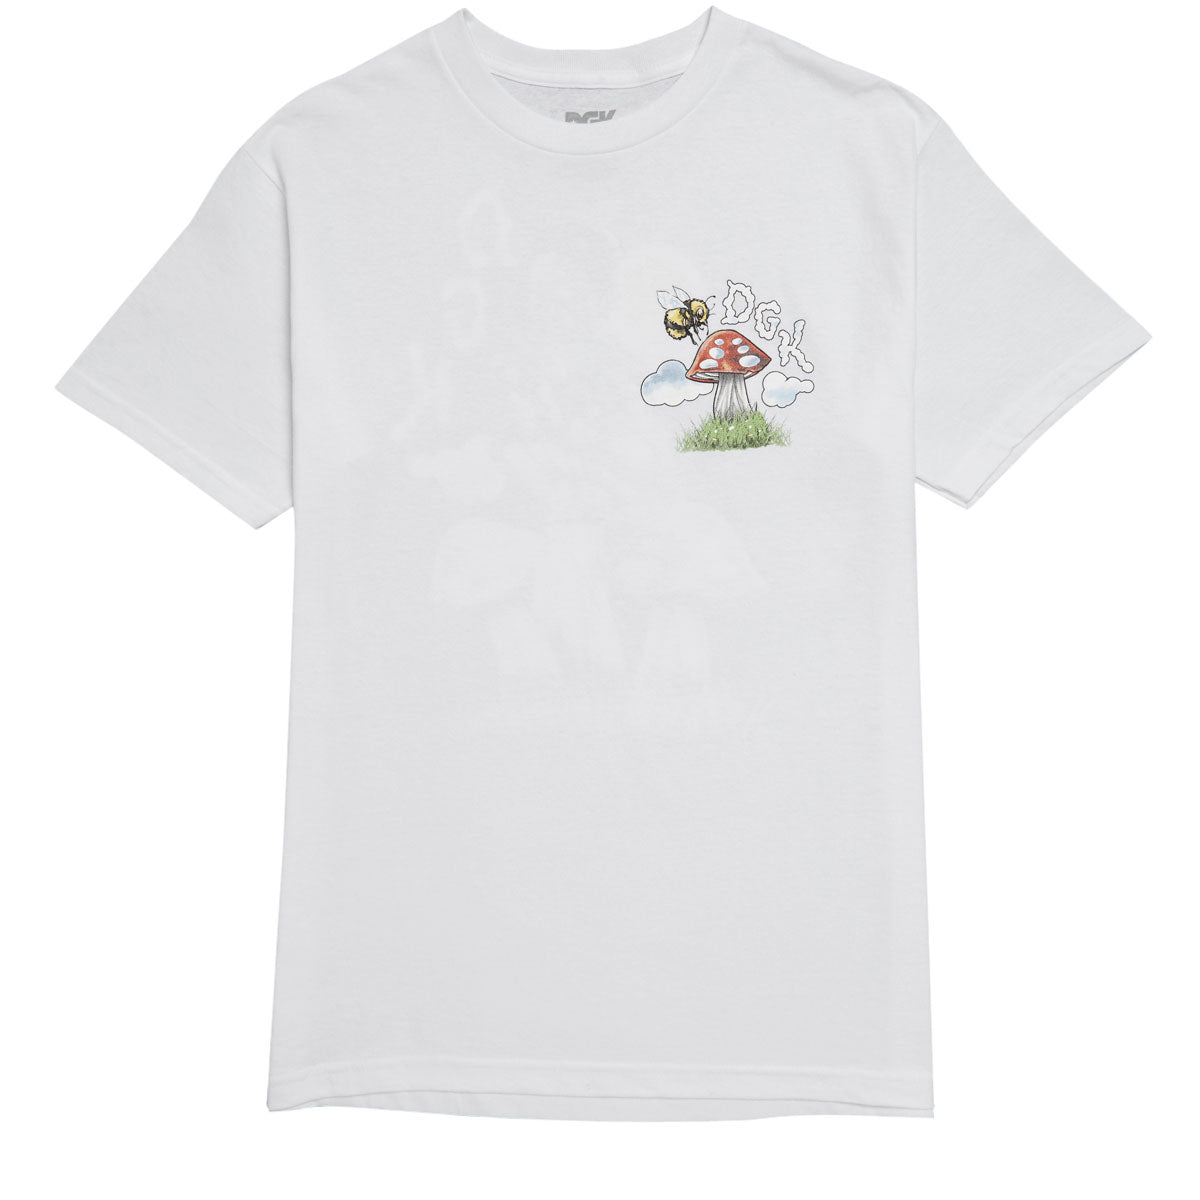 DGK Trippy Math T-Shirt - White image 2